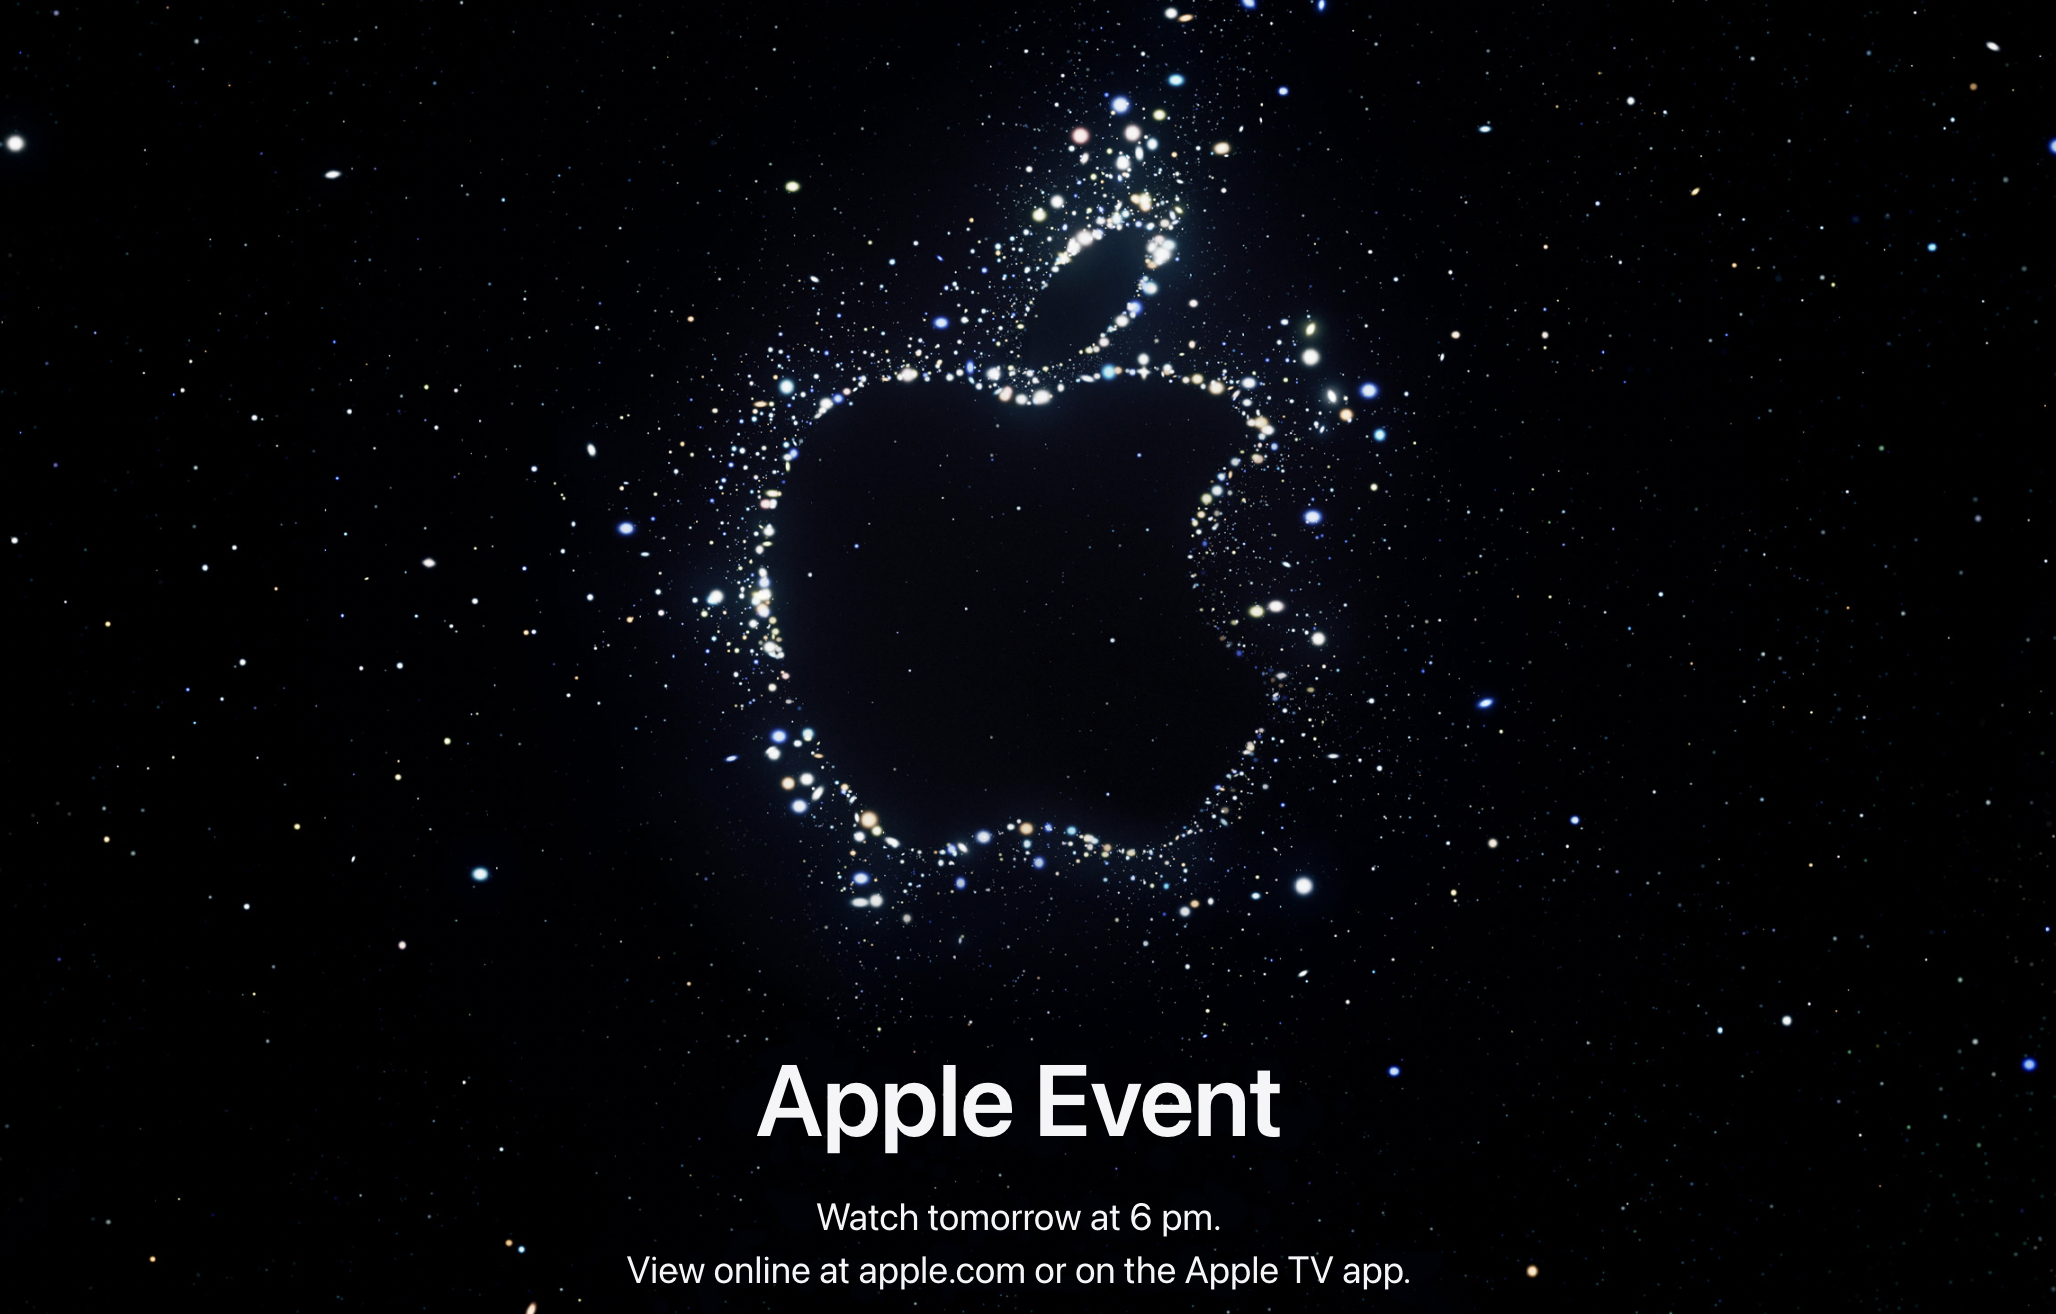 Apple event invite